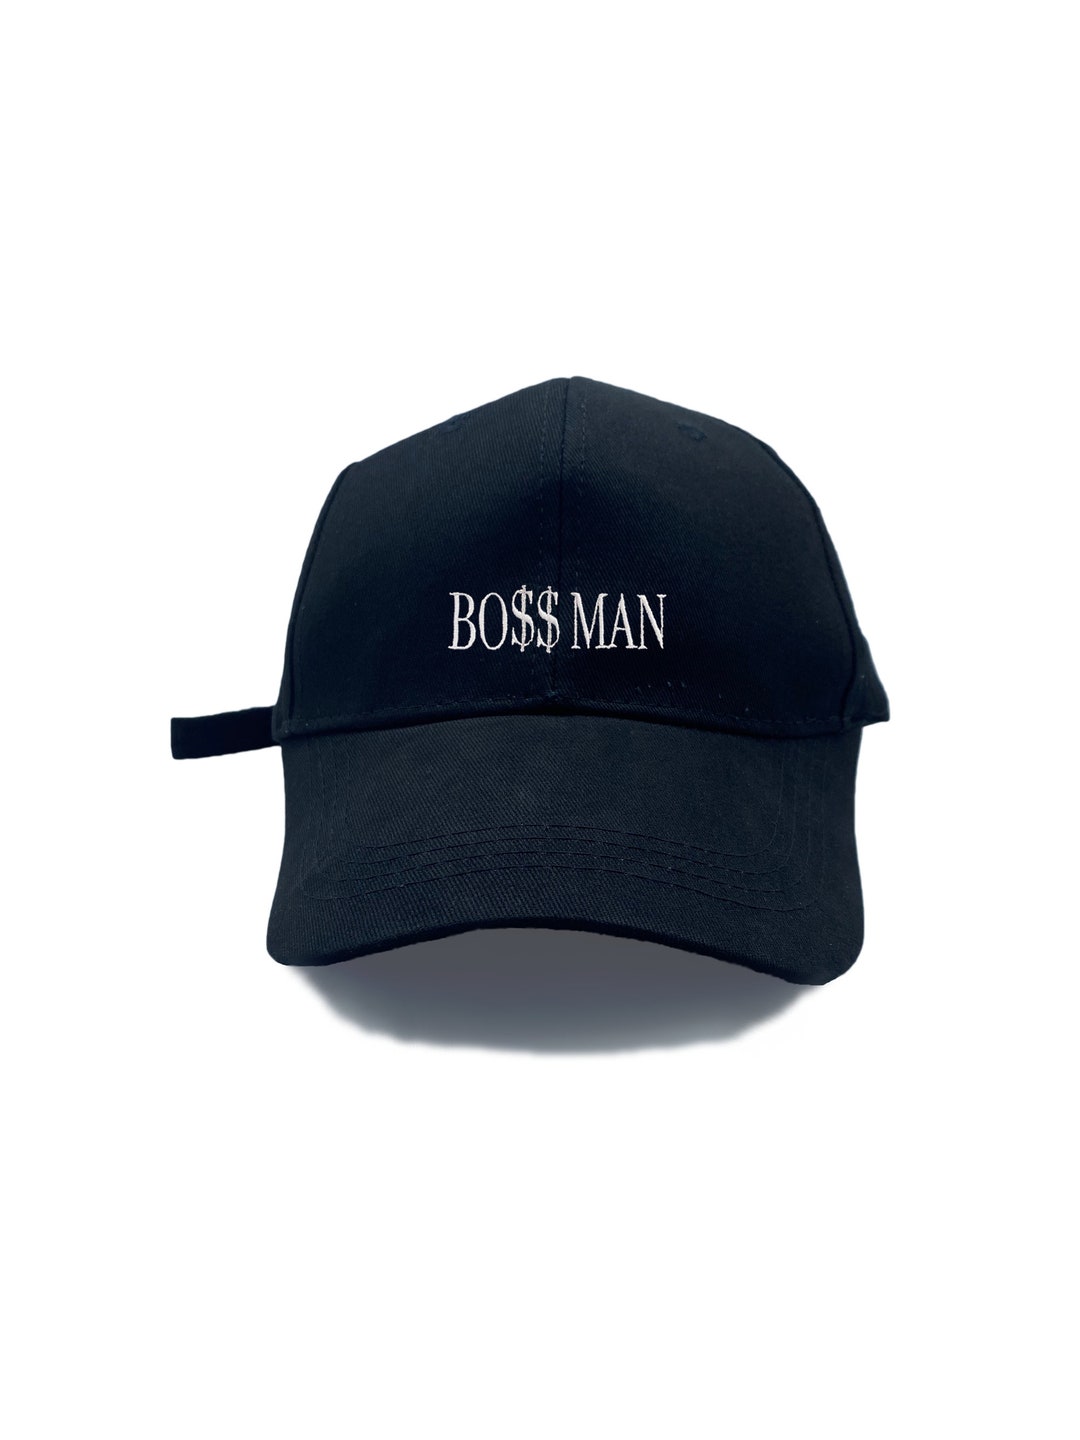 BOSS MAN Hat -  Canada